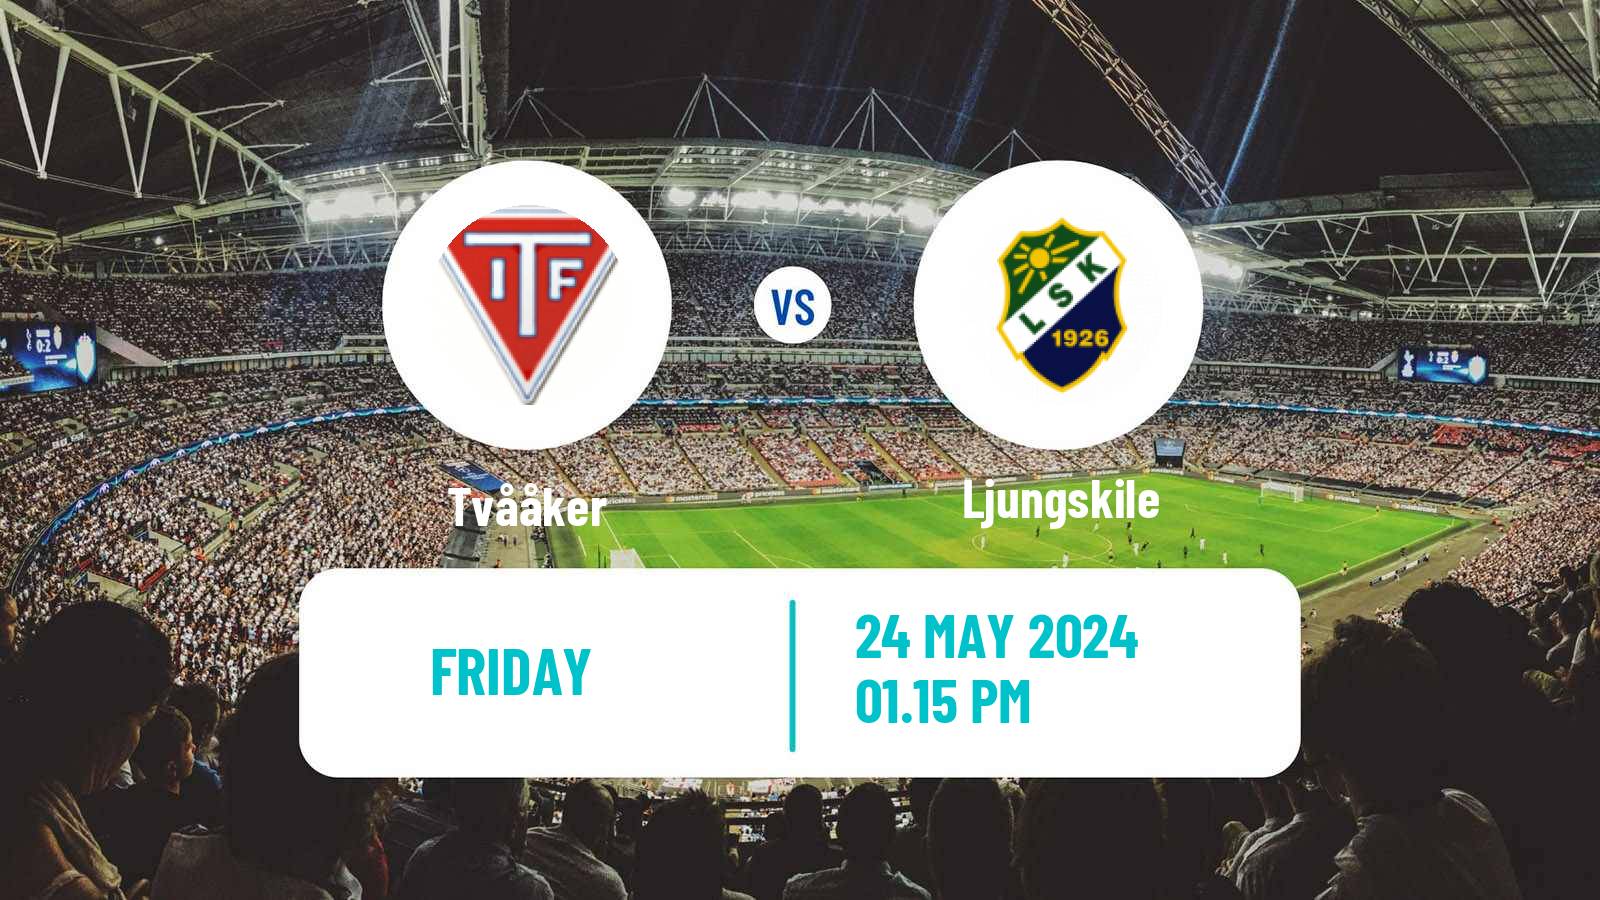 Soccer Swedish Division 1 Södra Tvååker - Ljungskile